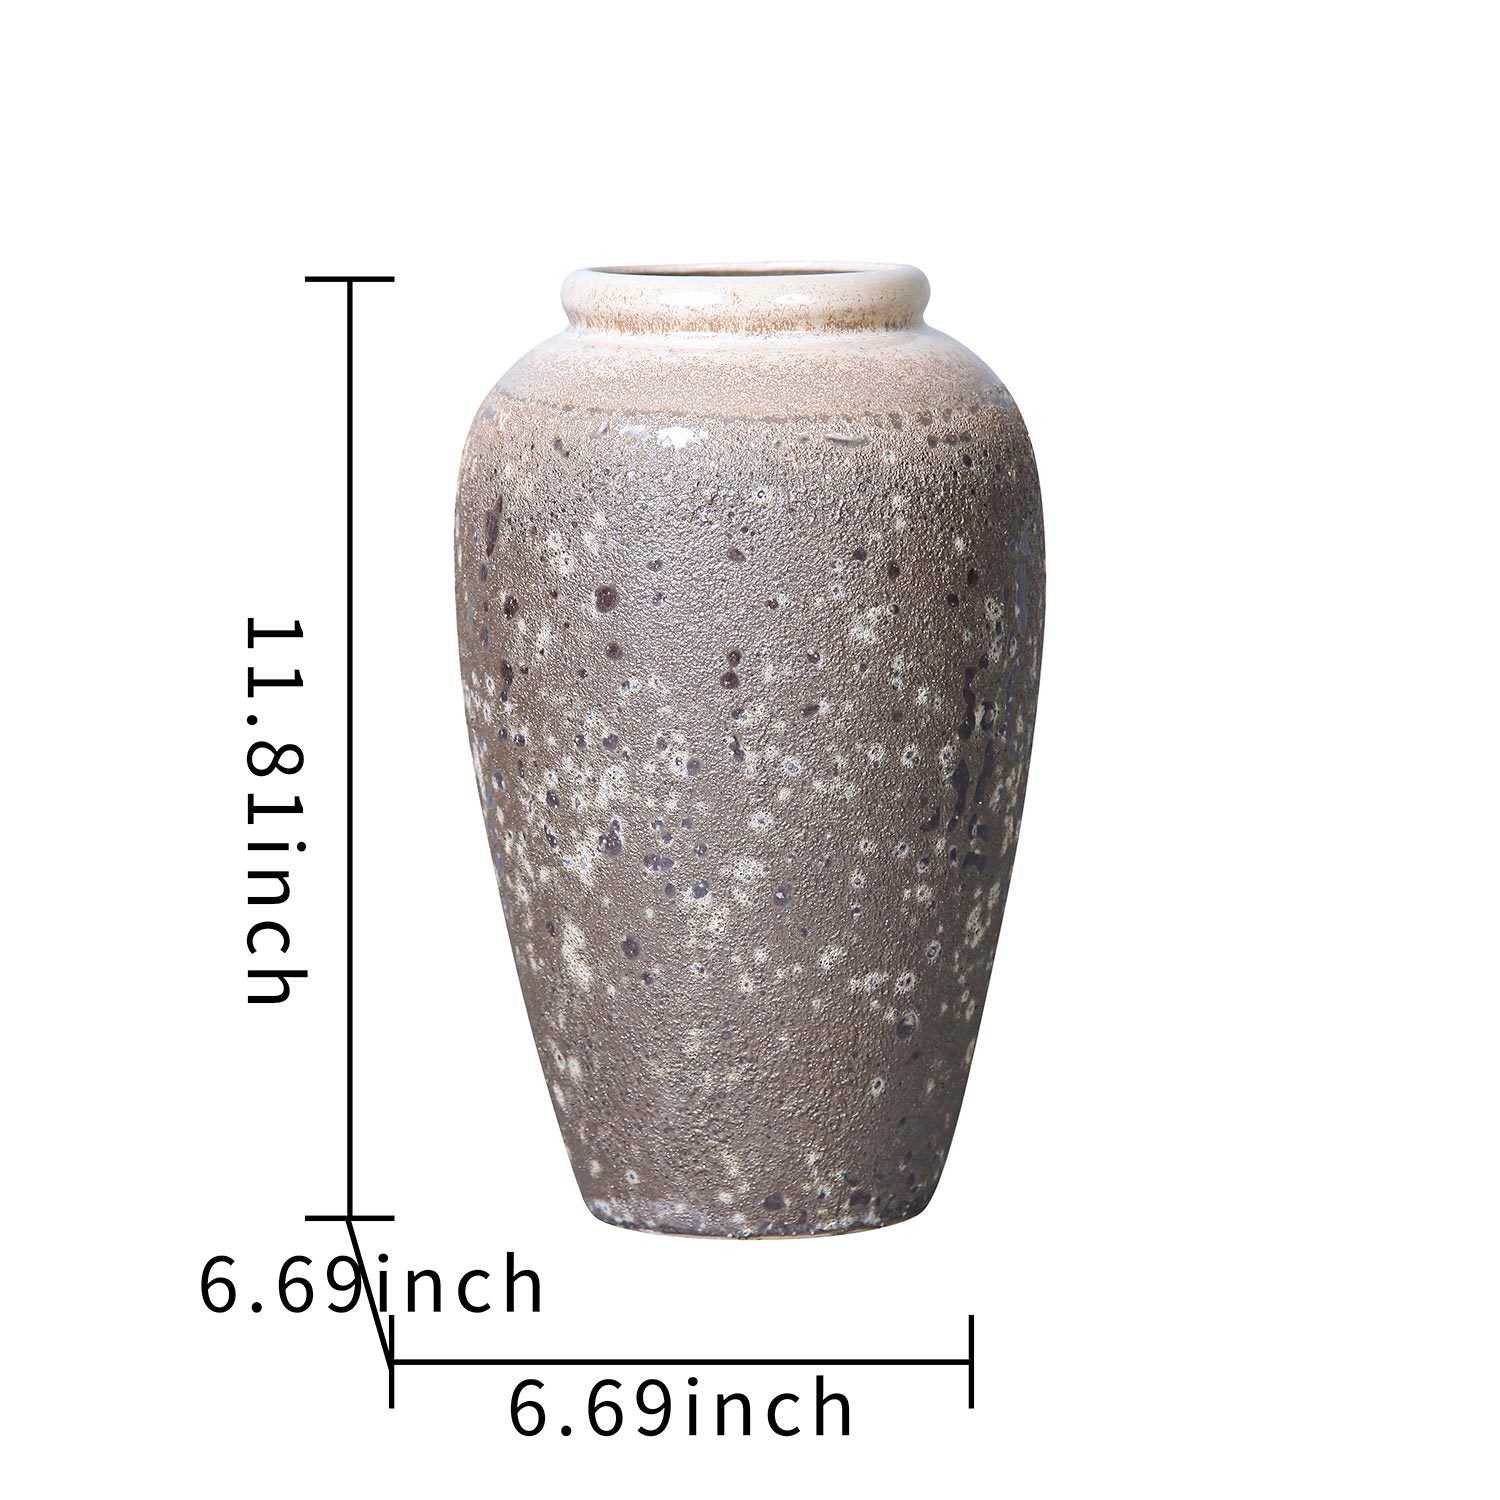 Vintage Sand Ceramic Vase 6.5"D x 12"H Artisanal Piece retro gray-ceramic